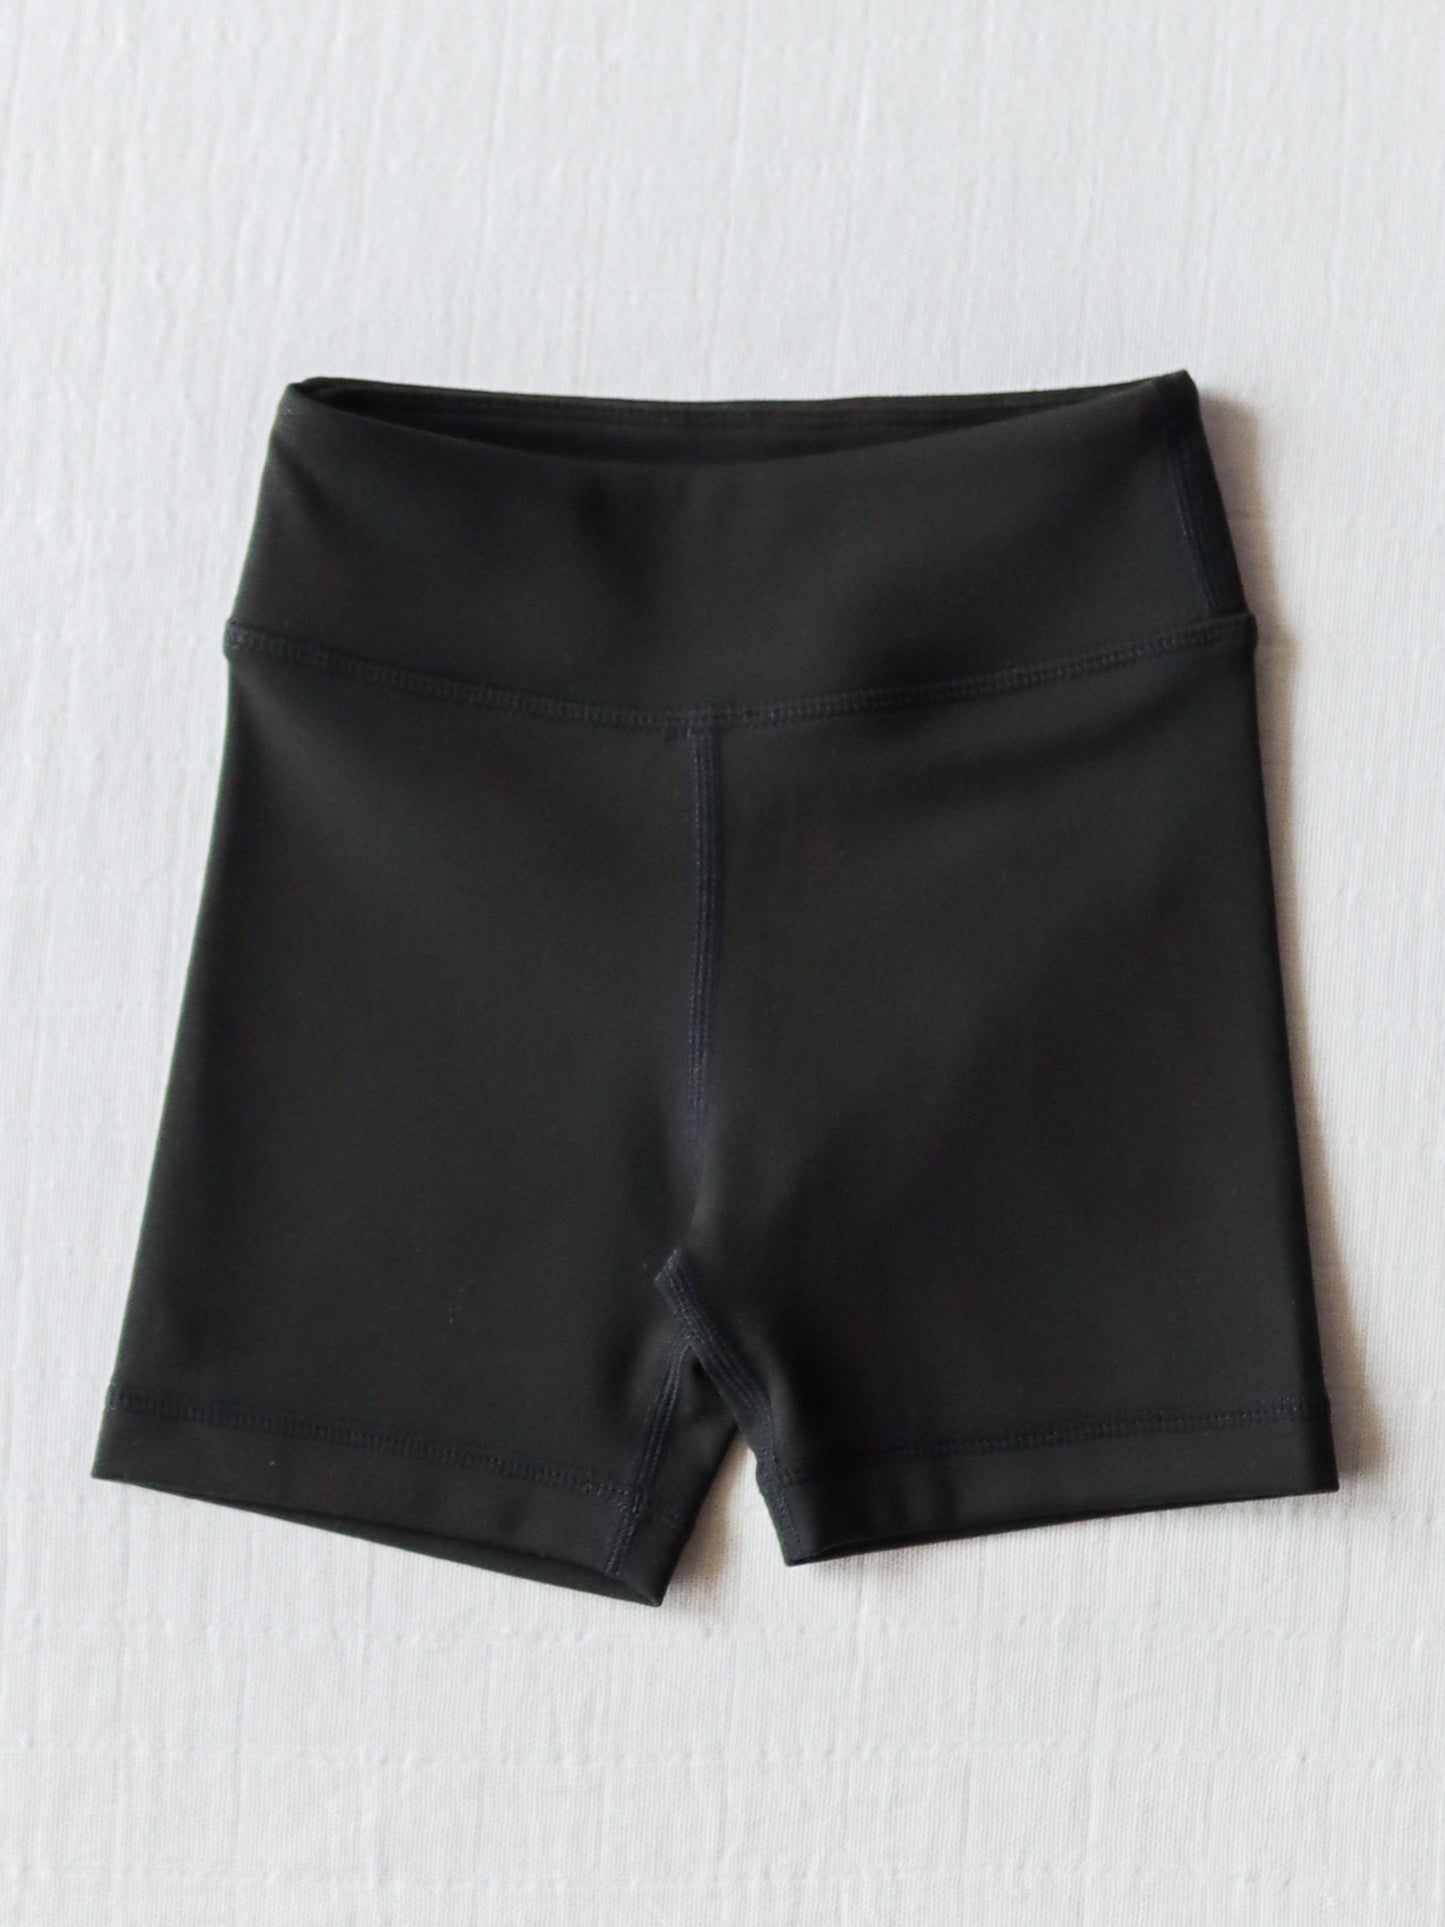 Gym Shorts - Black Solid